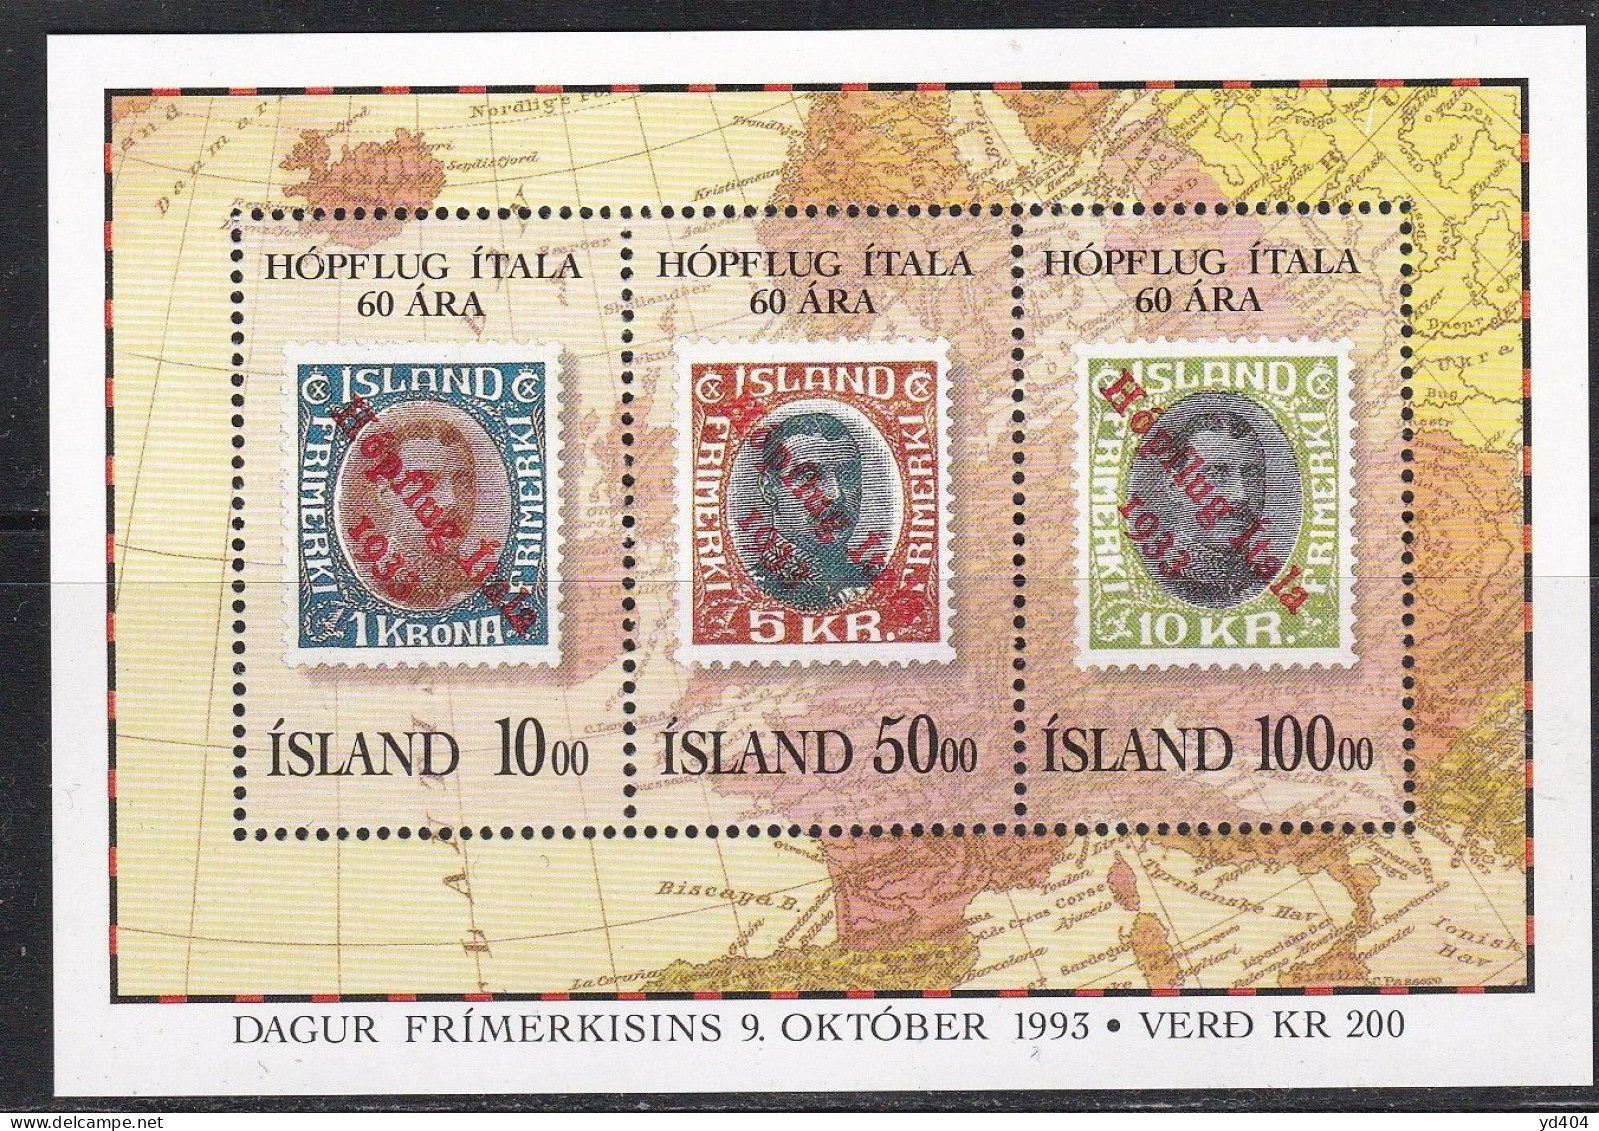 IS482 – ISLANDE – ICELAND – 1993 – JOURNEE DU TIMBRE – SG # MS 810 MNH 12,25 € - Blocks & Sheetlets